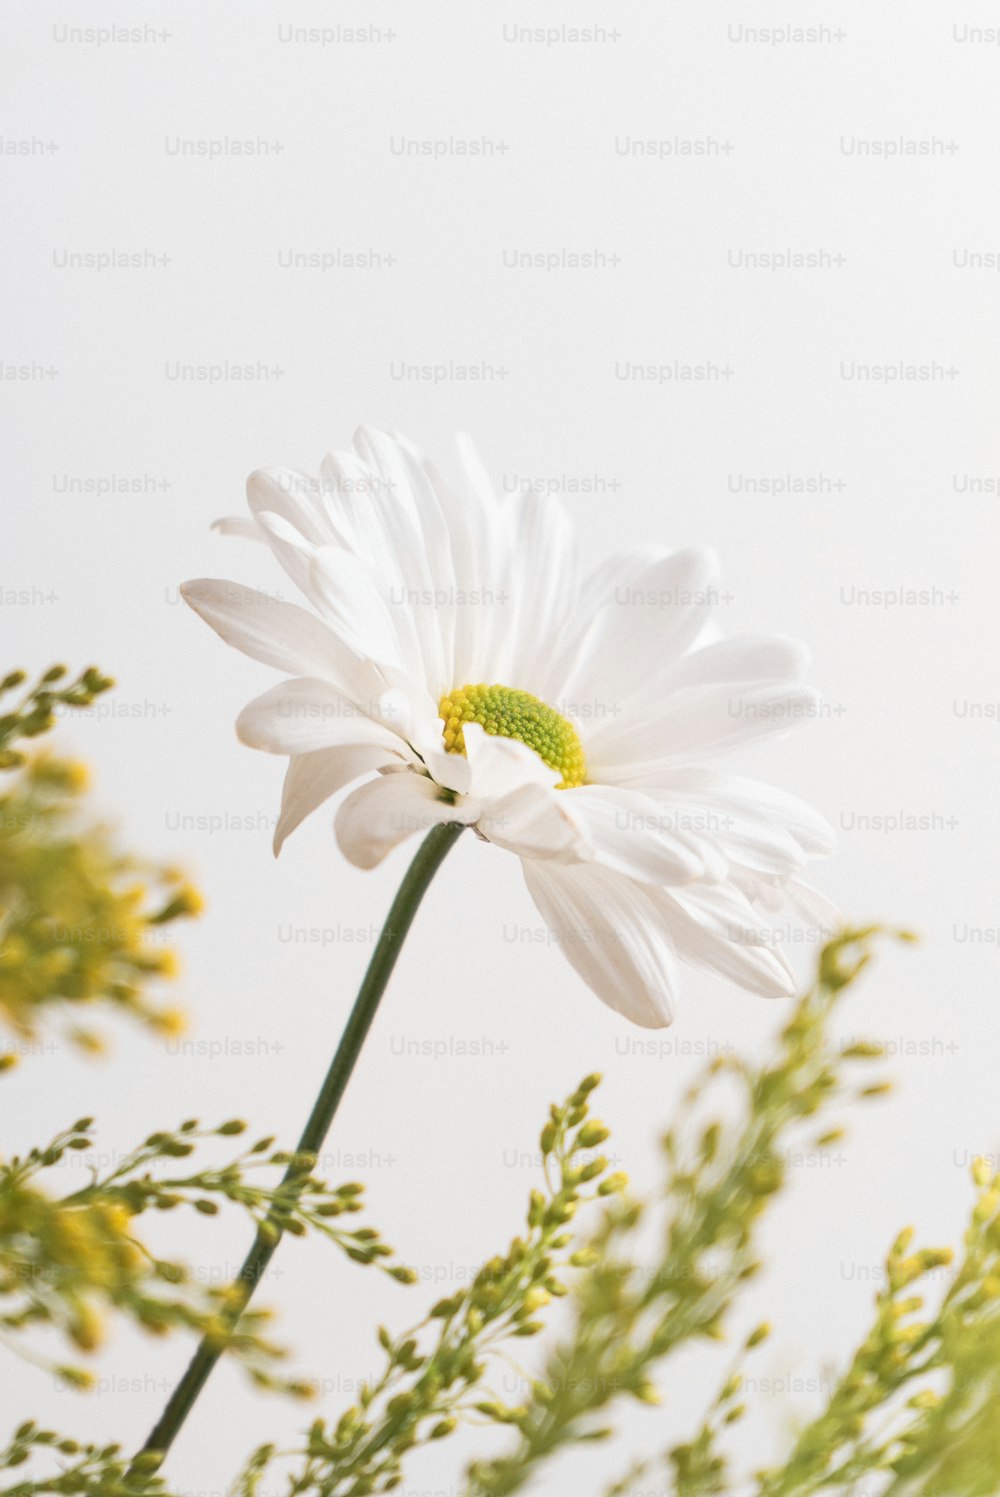 1K+ Dry Flower Pictures  Download Free Images on Unsplash